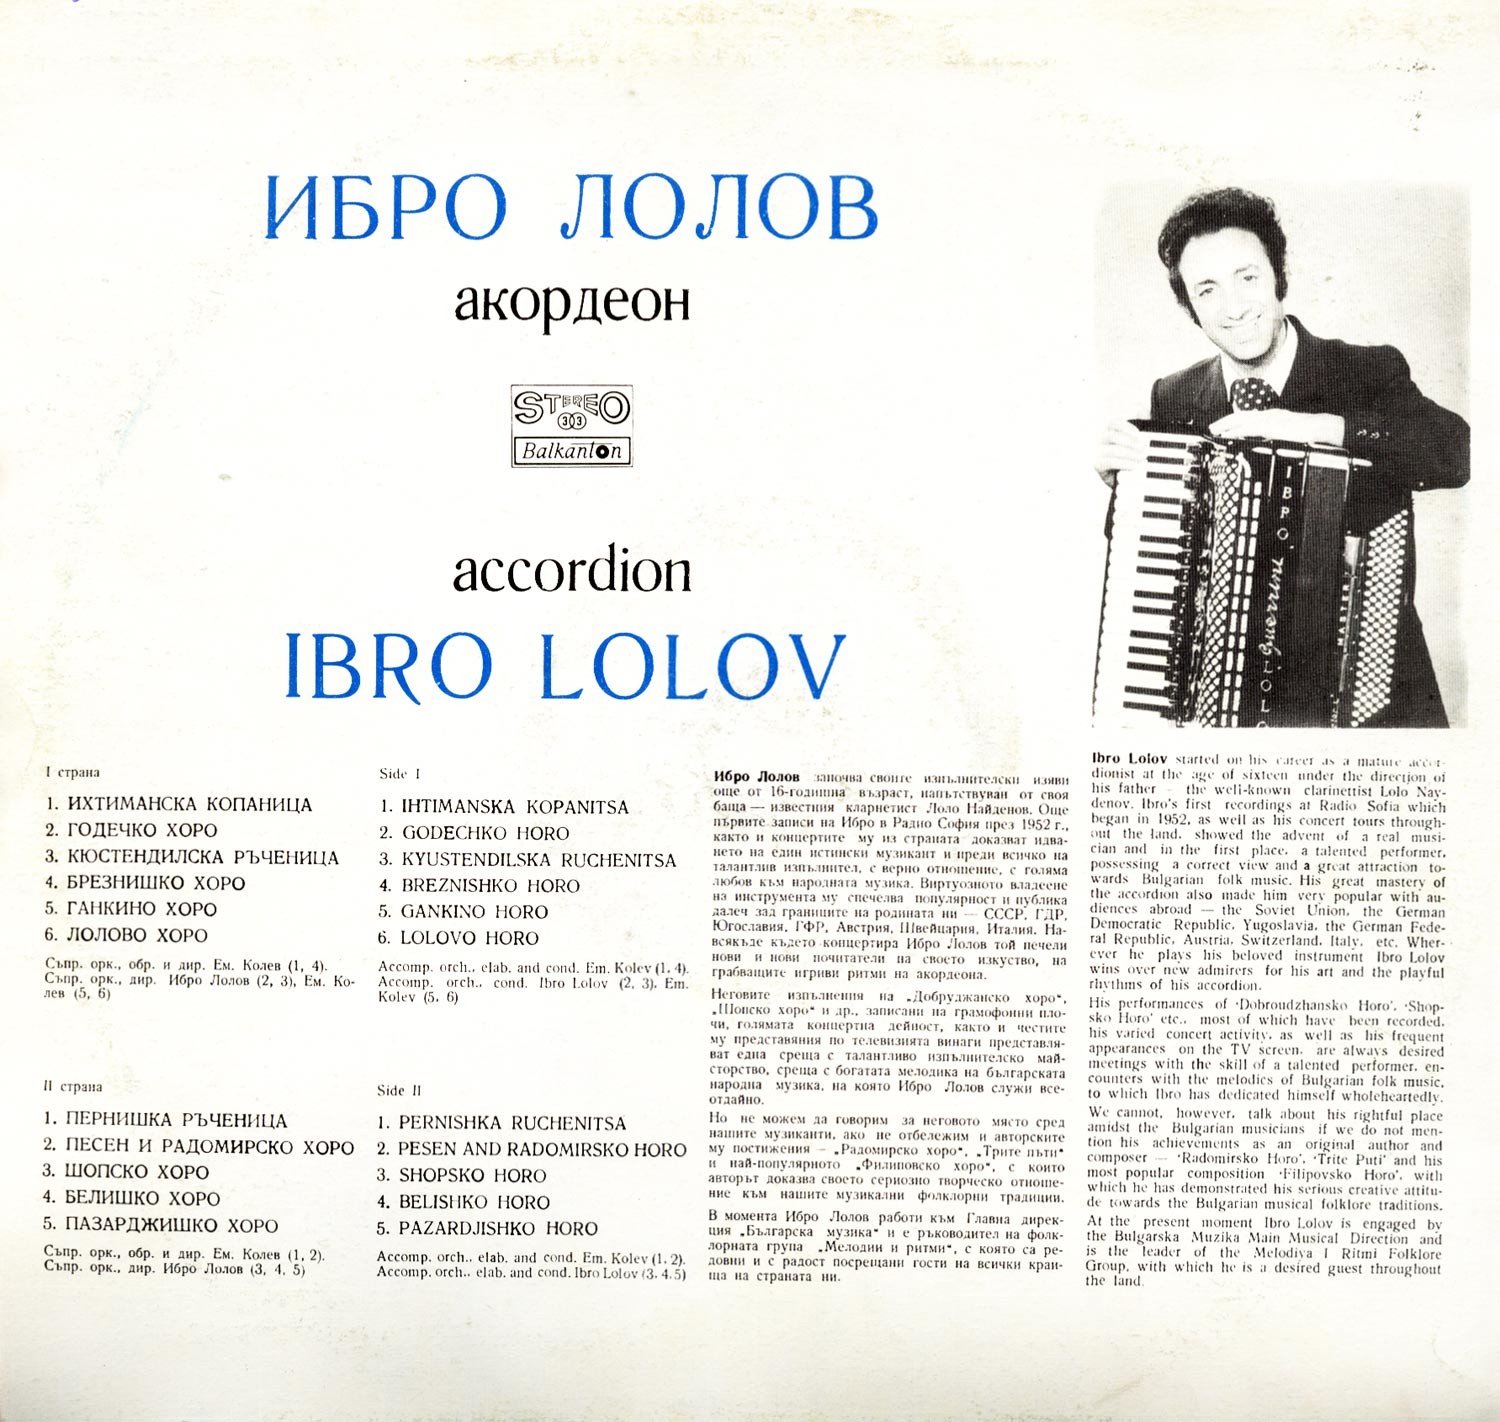 Ибро Лолов, акордеон